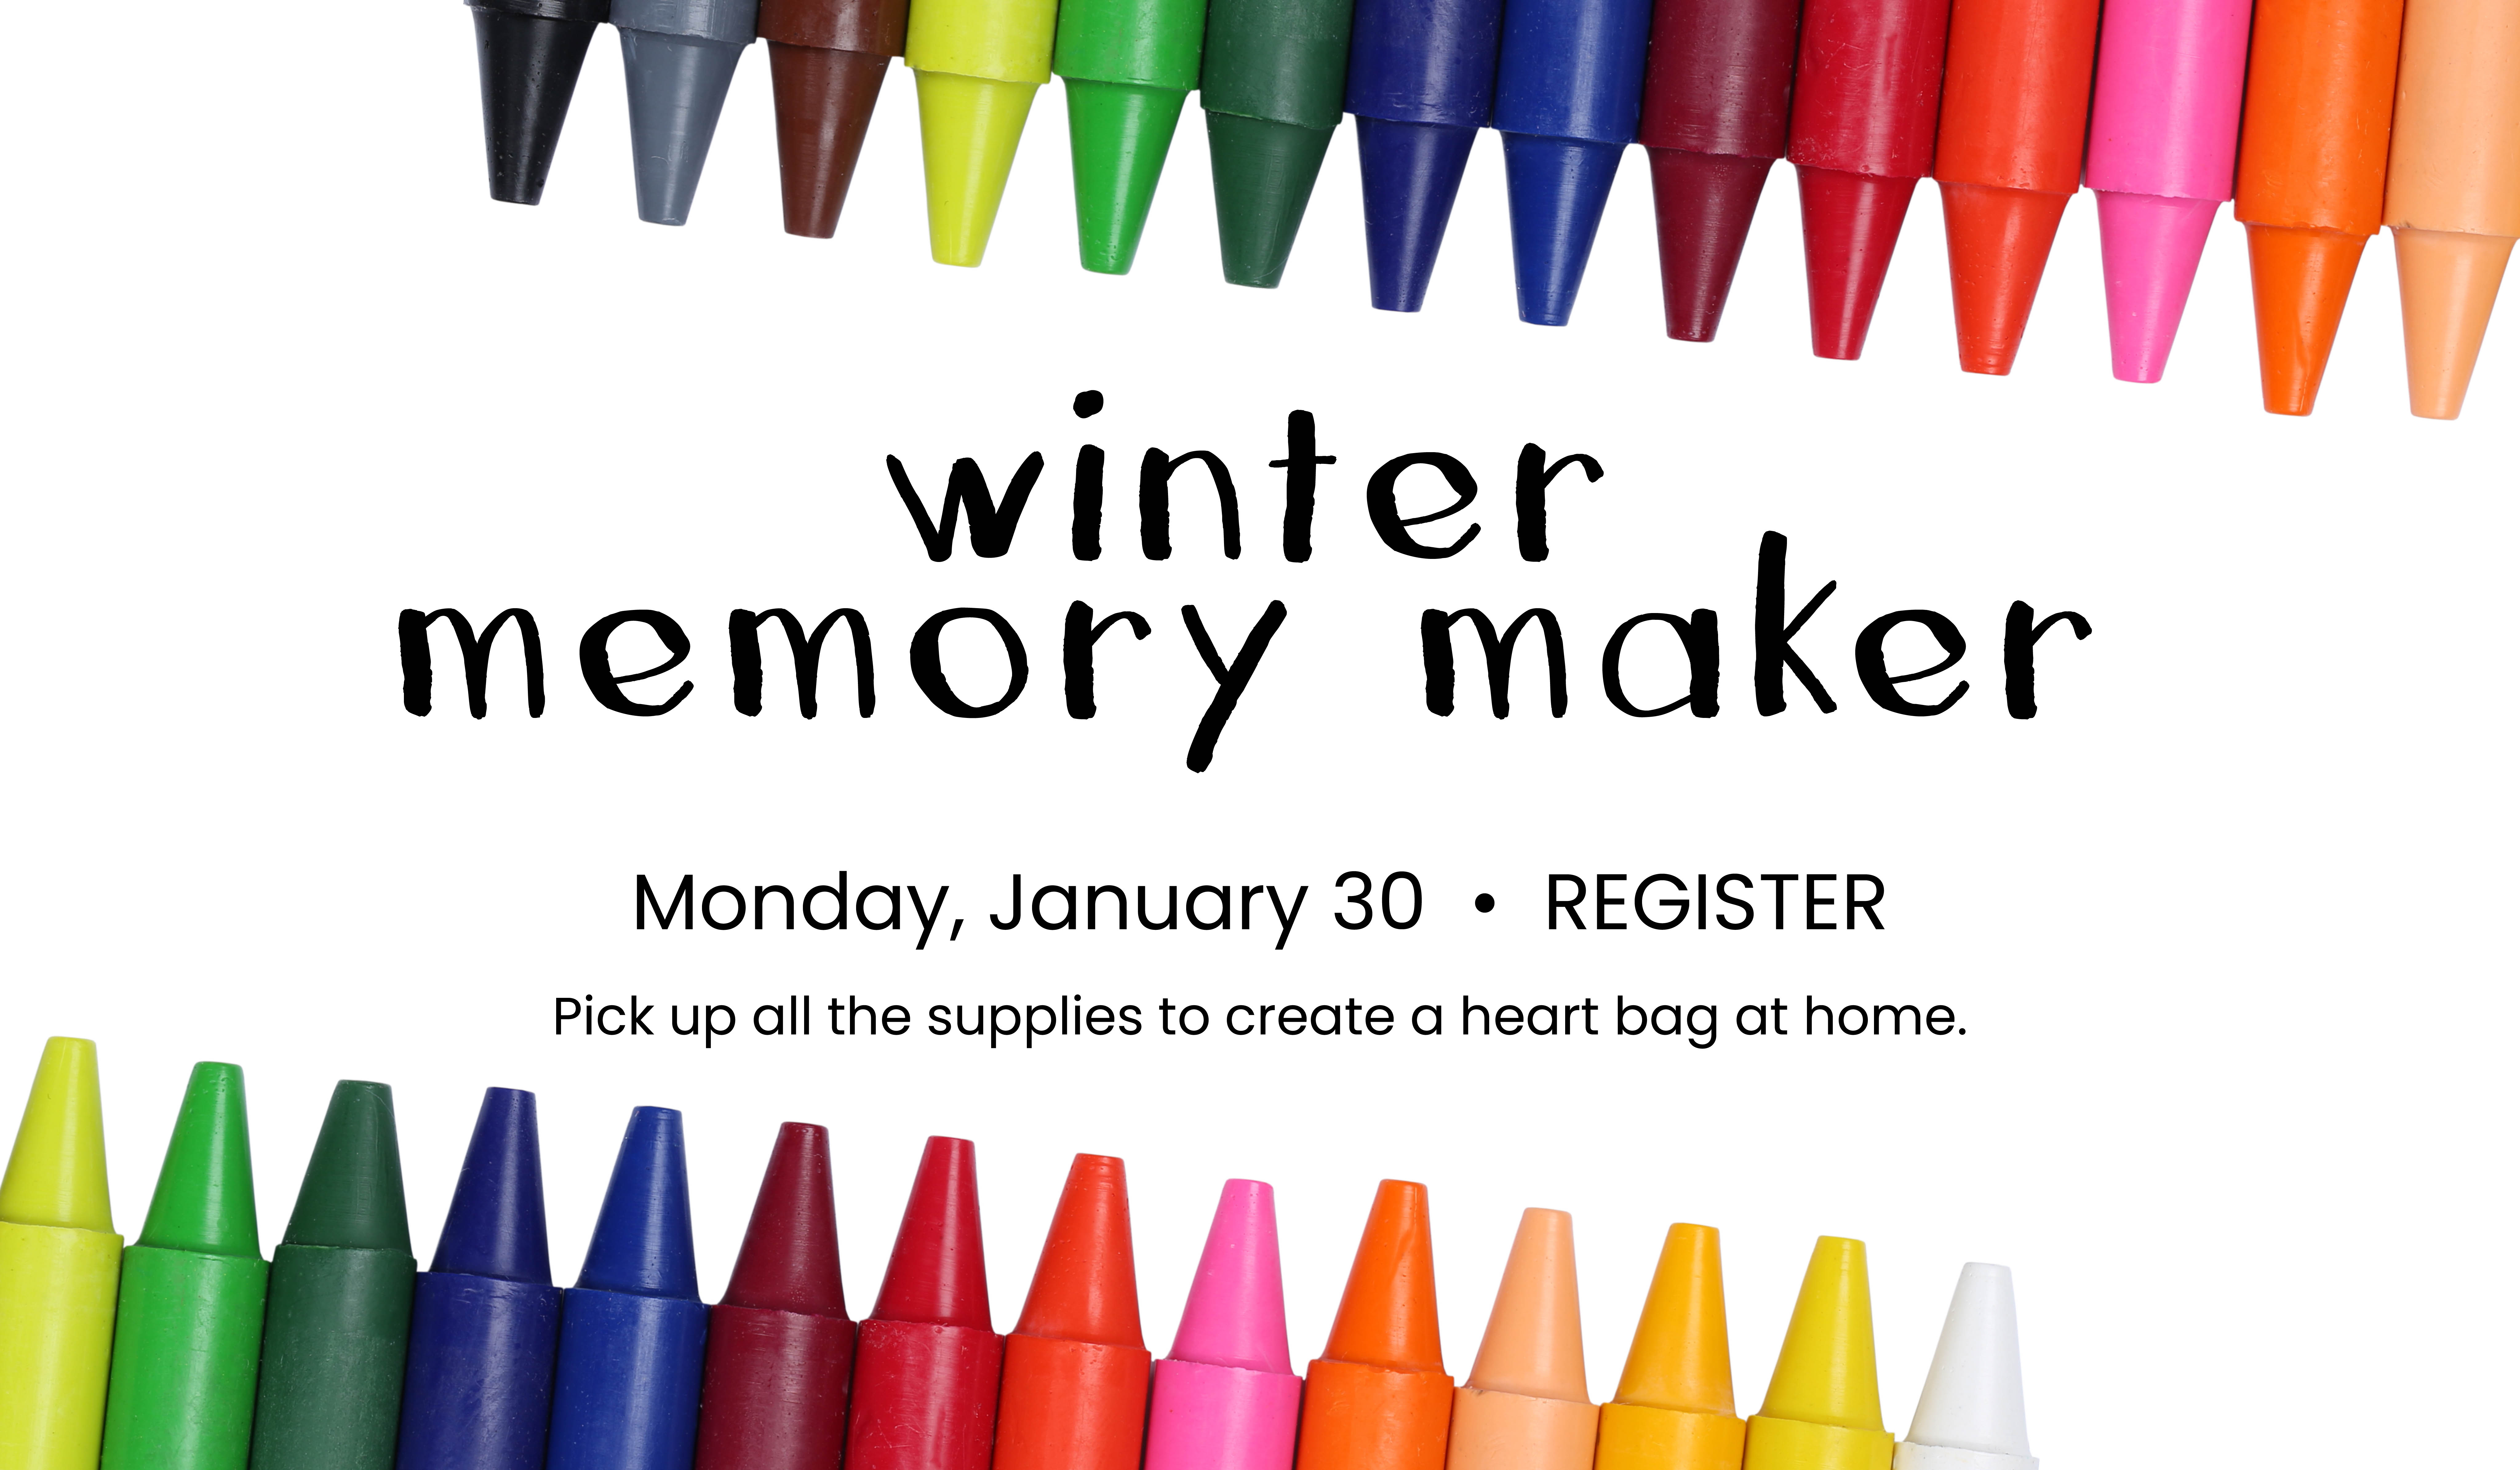 Winter memory maker image